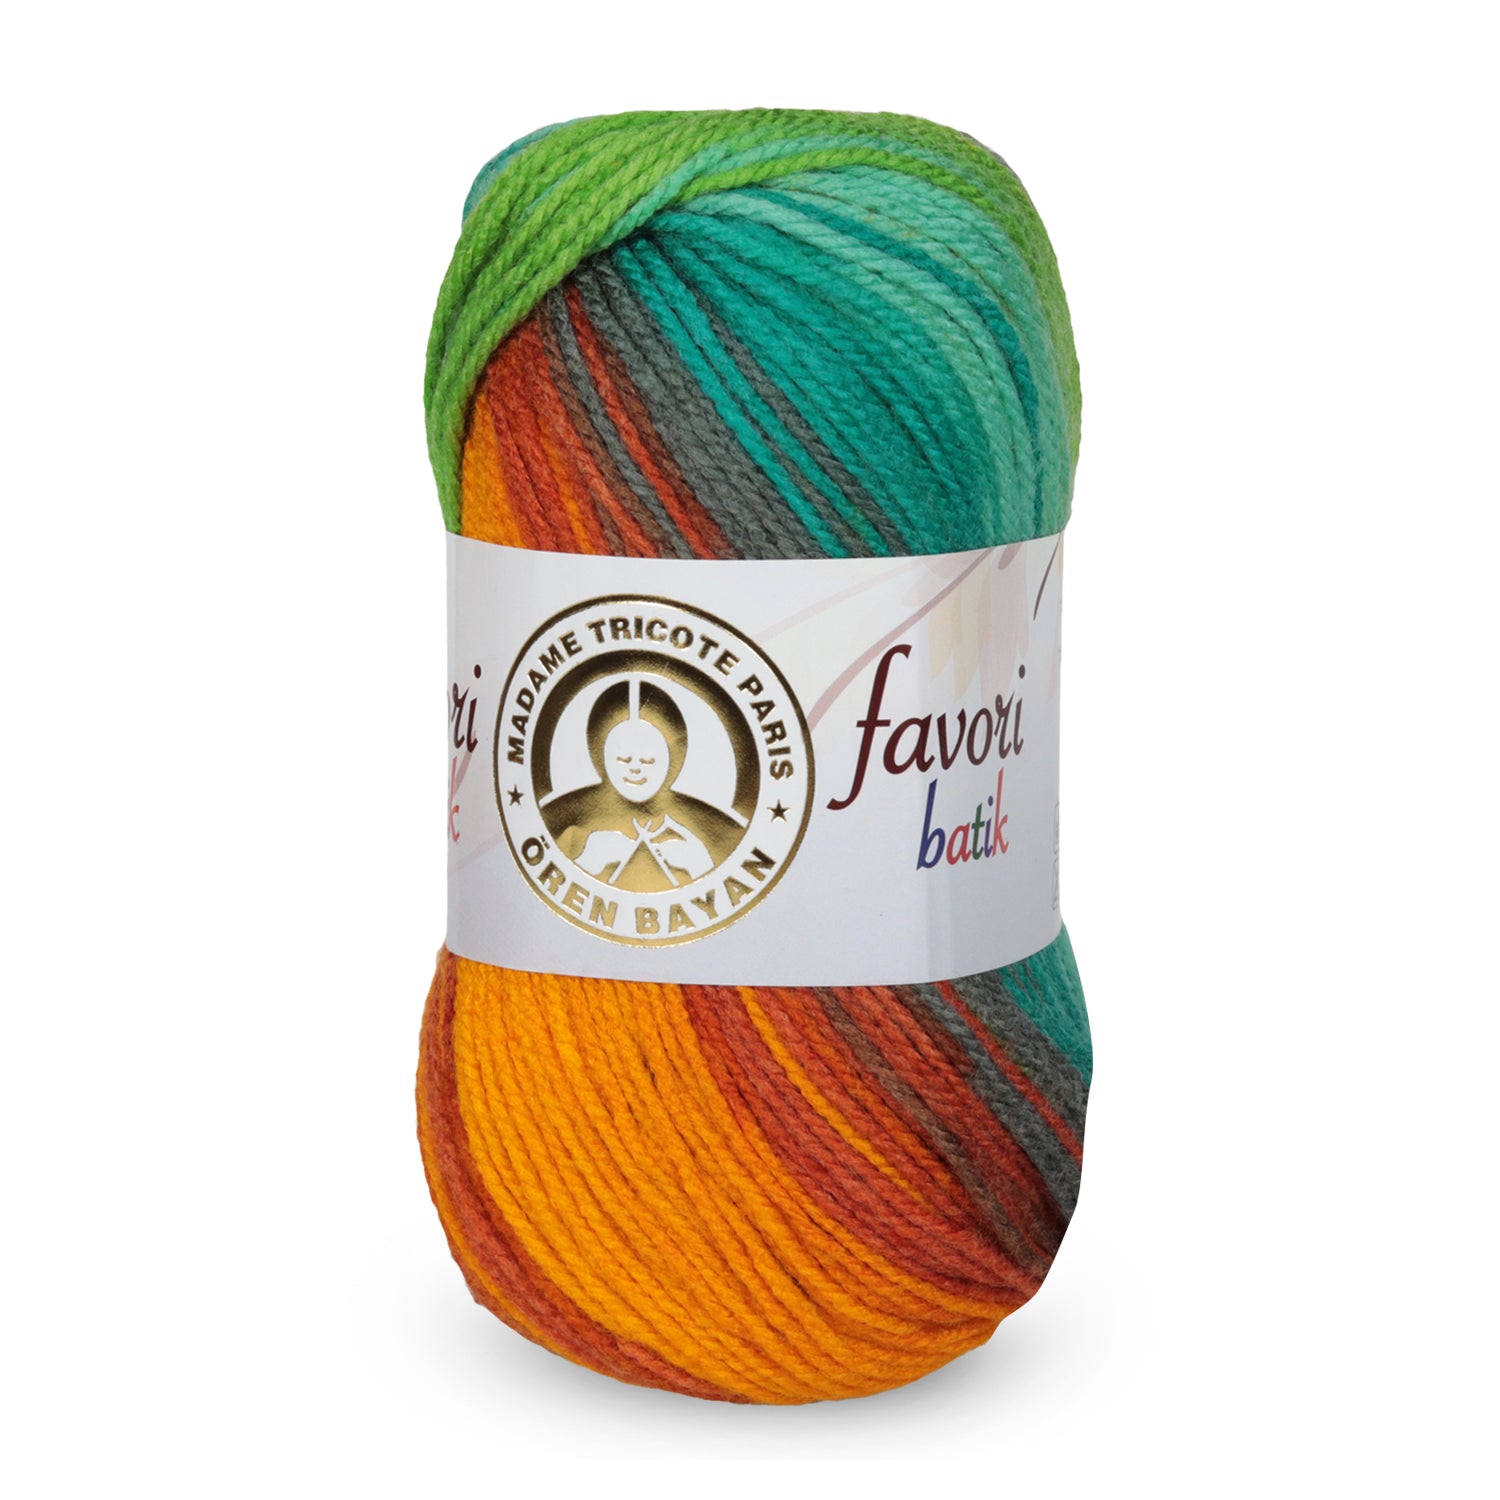 Madame Tricote Oren Bayan, Favori Line Yumak, Multicolor Yarn, 100